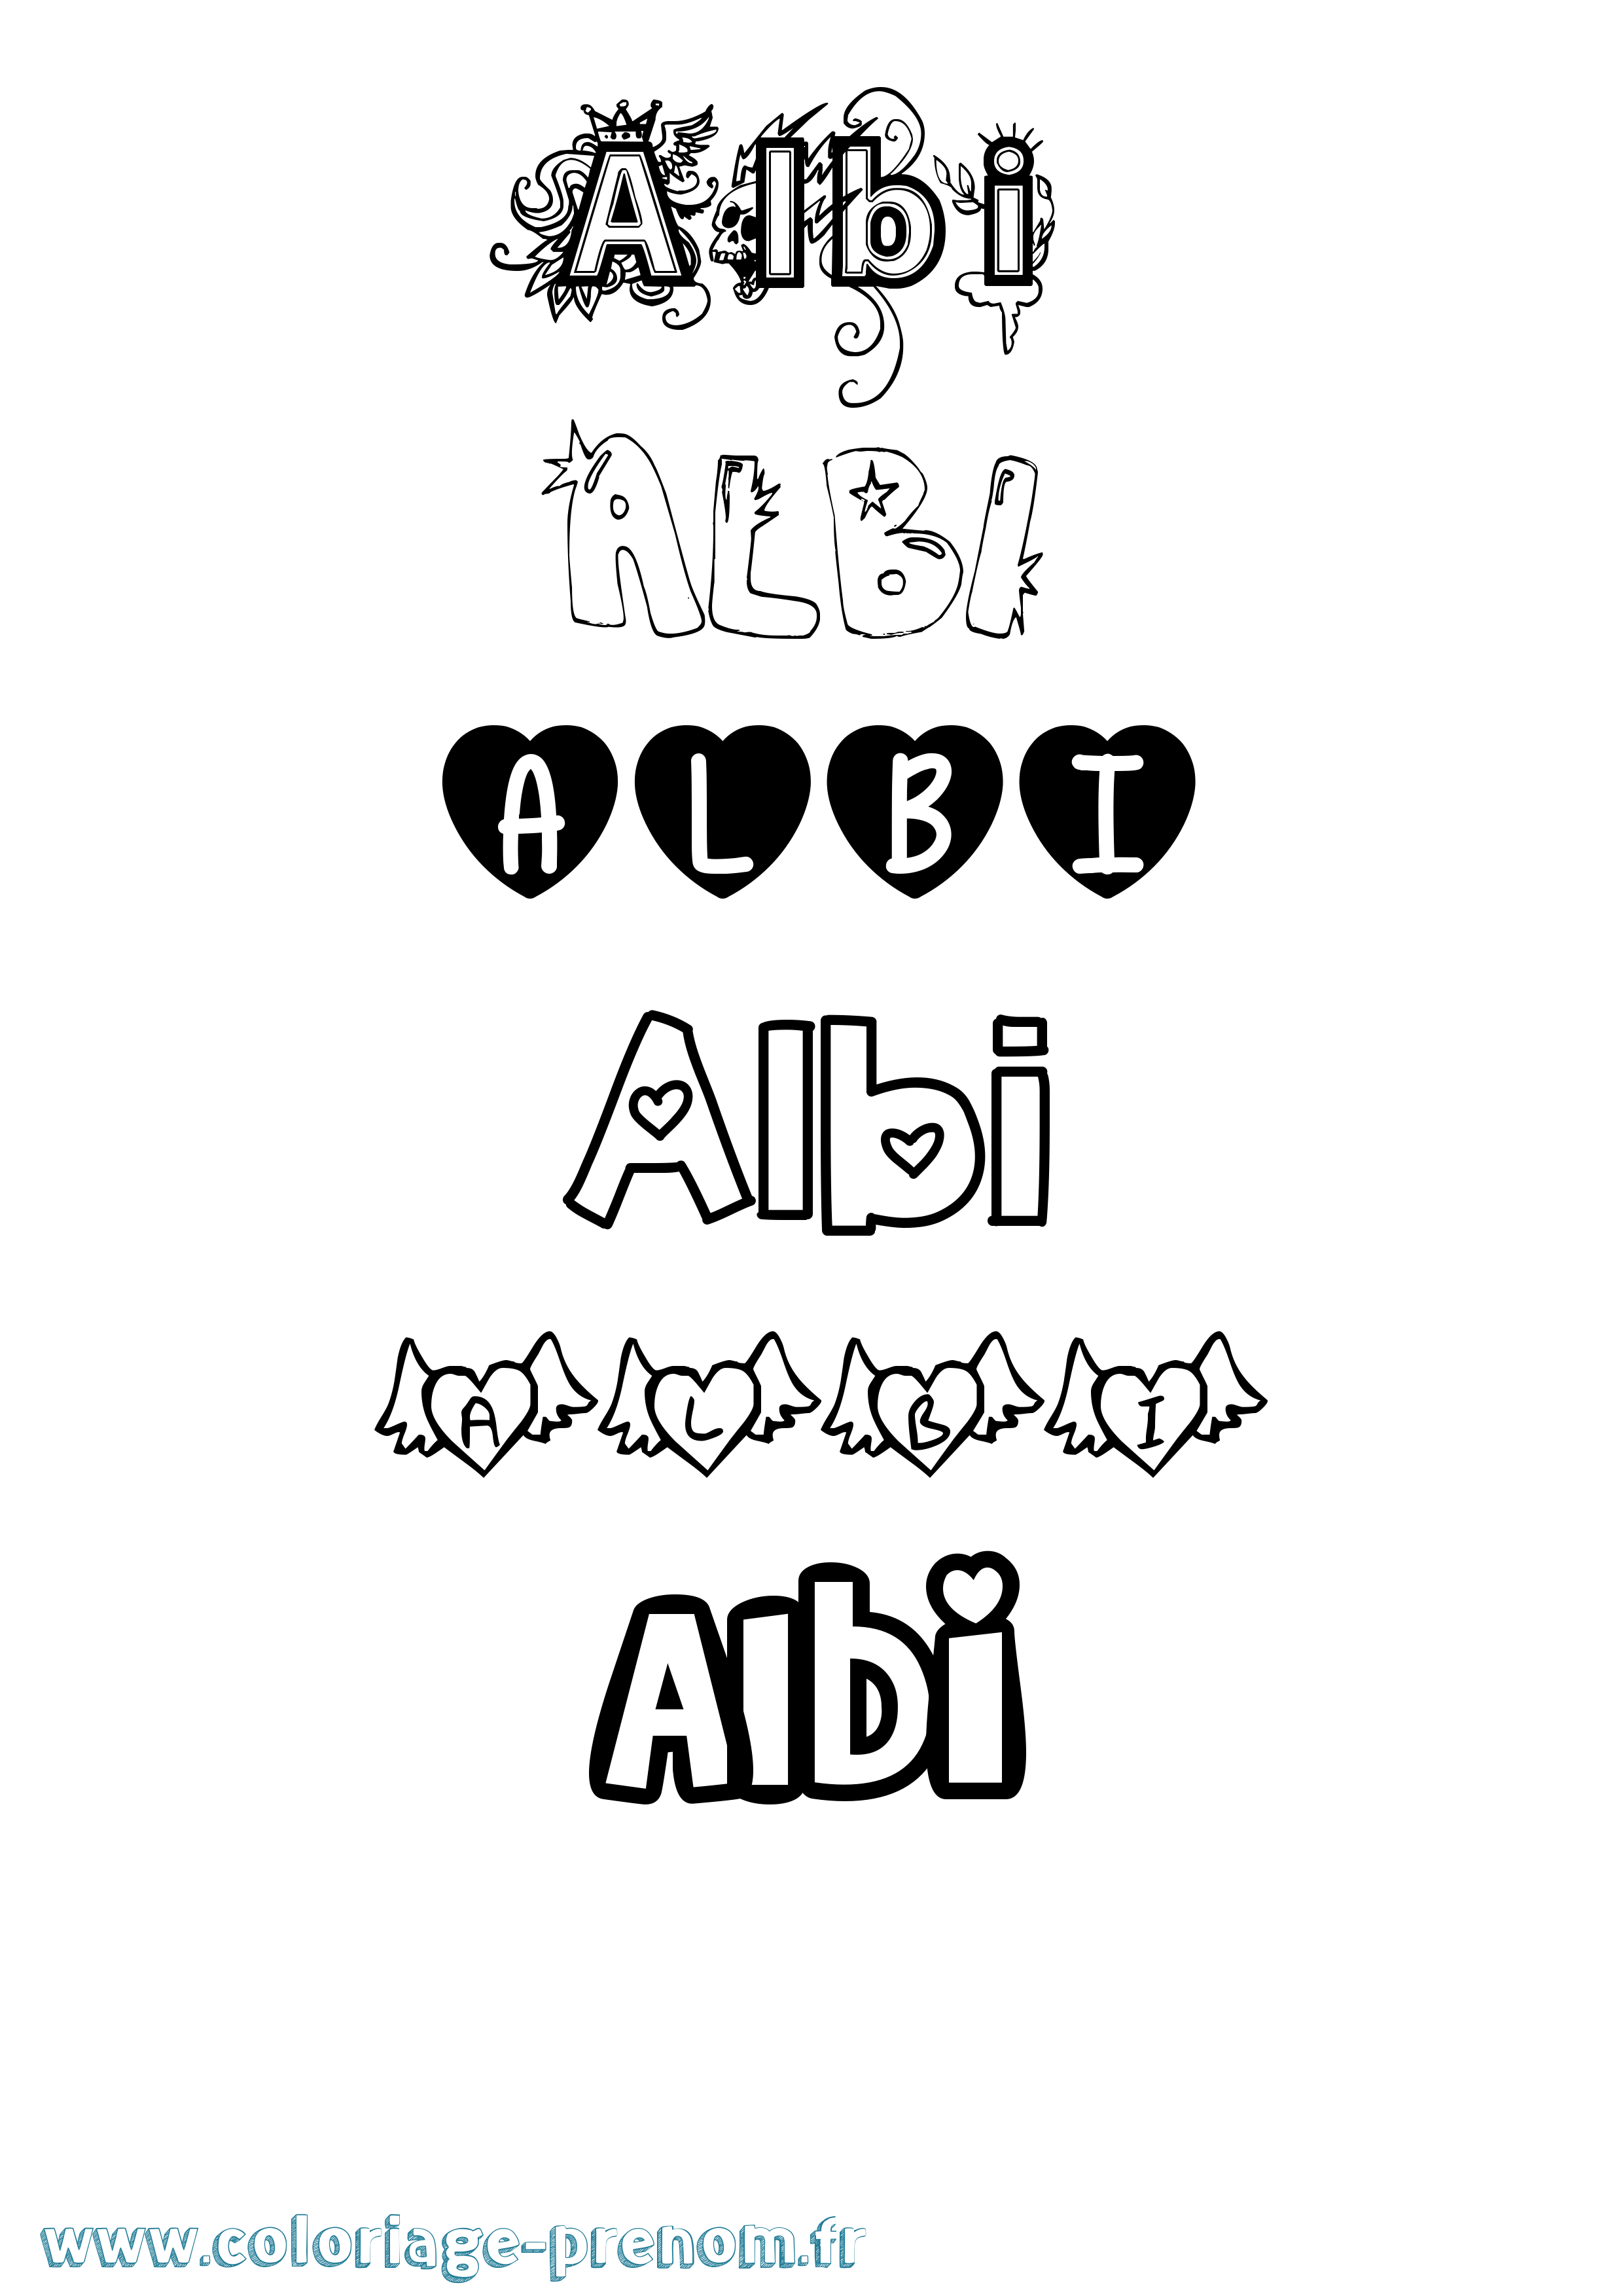 Coloriage prénom Albi Girly